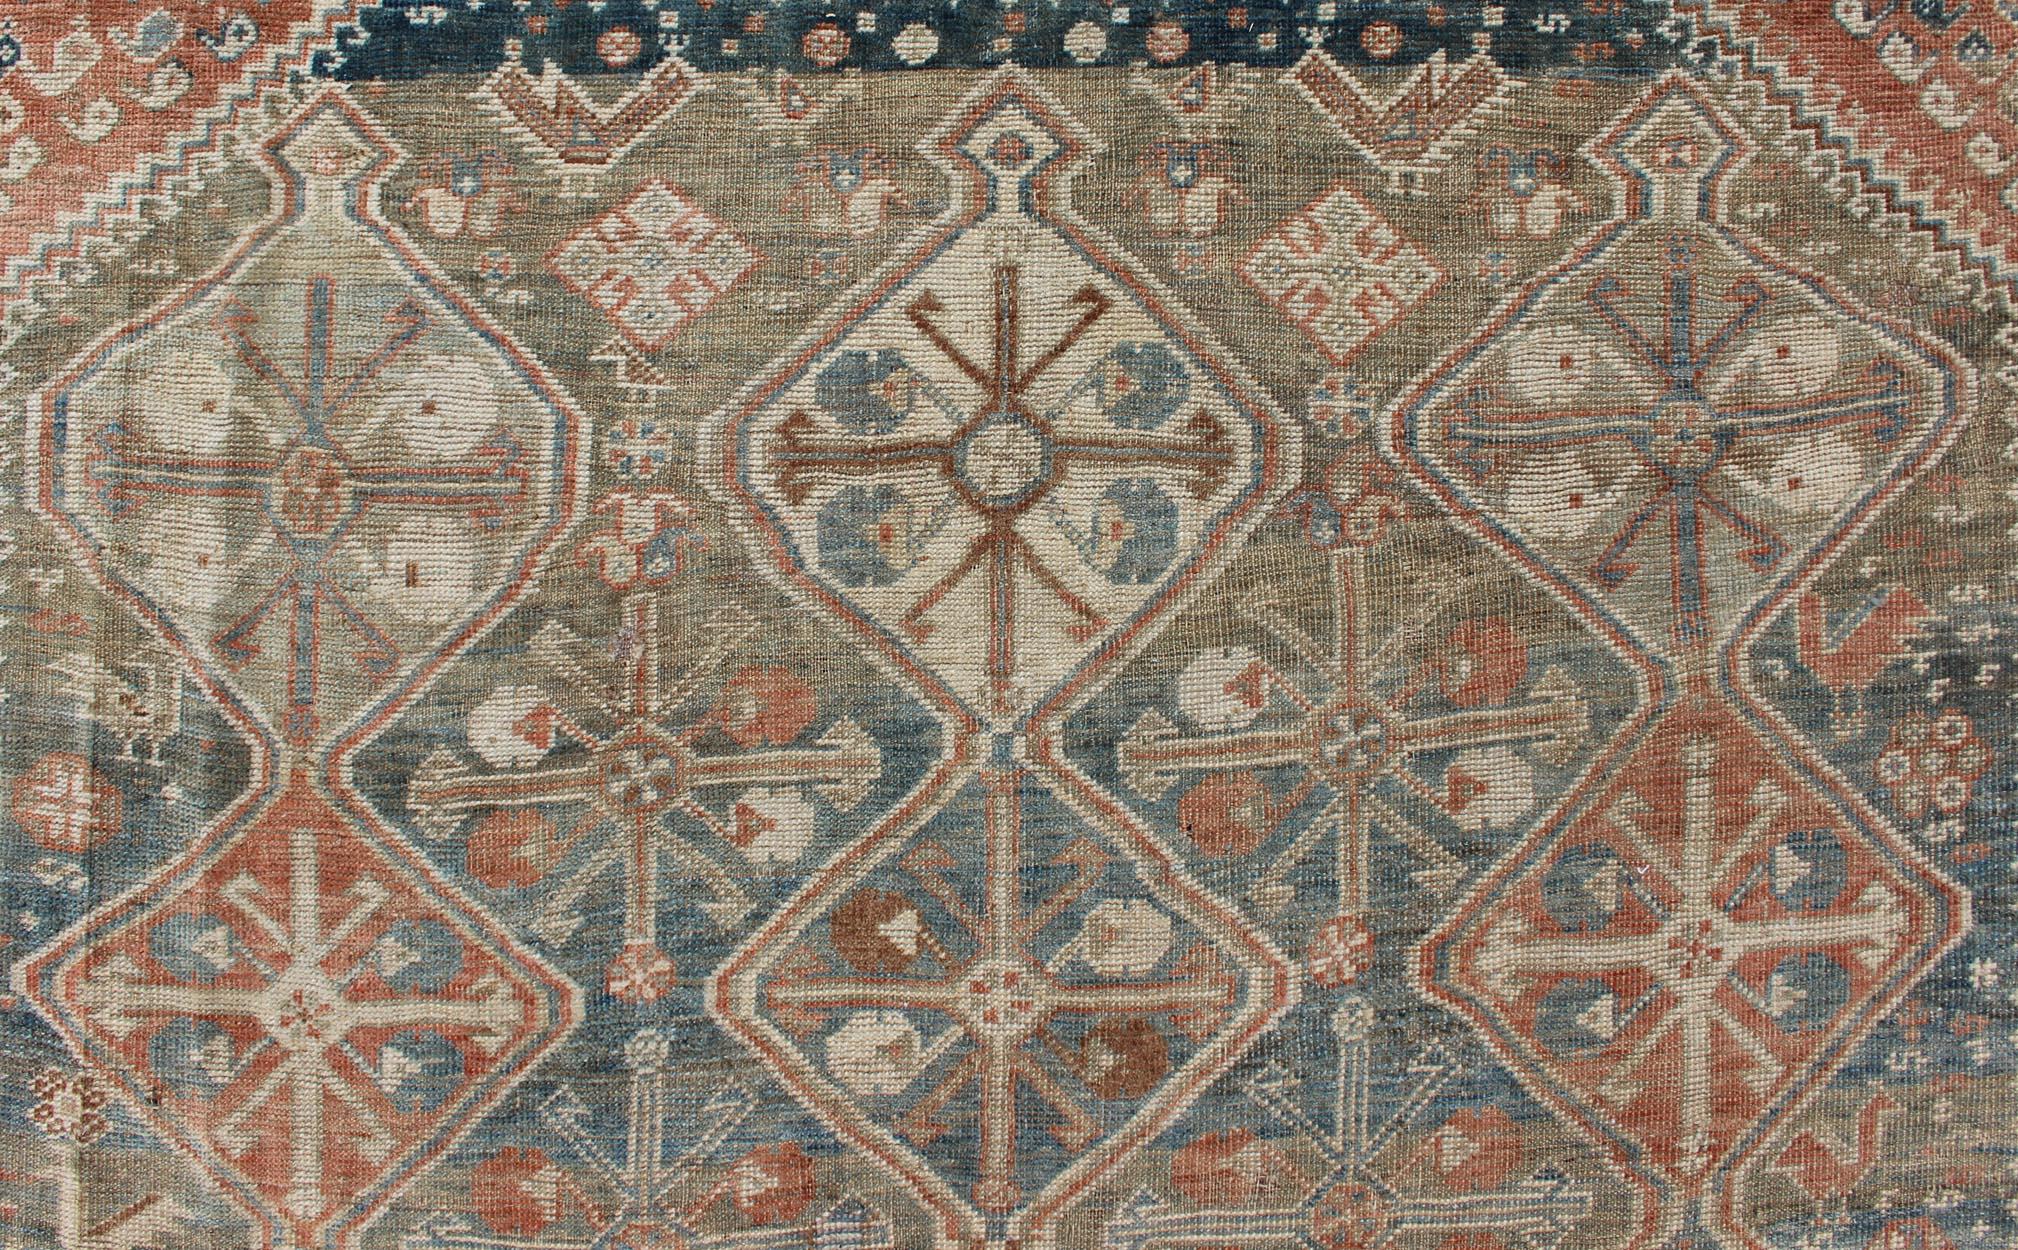 Wool Antique Tribal Persian Qashqai Rug with Geometric Diamond Design in Multi-Colors